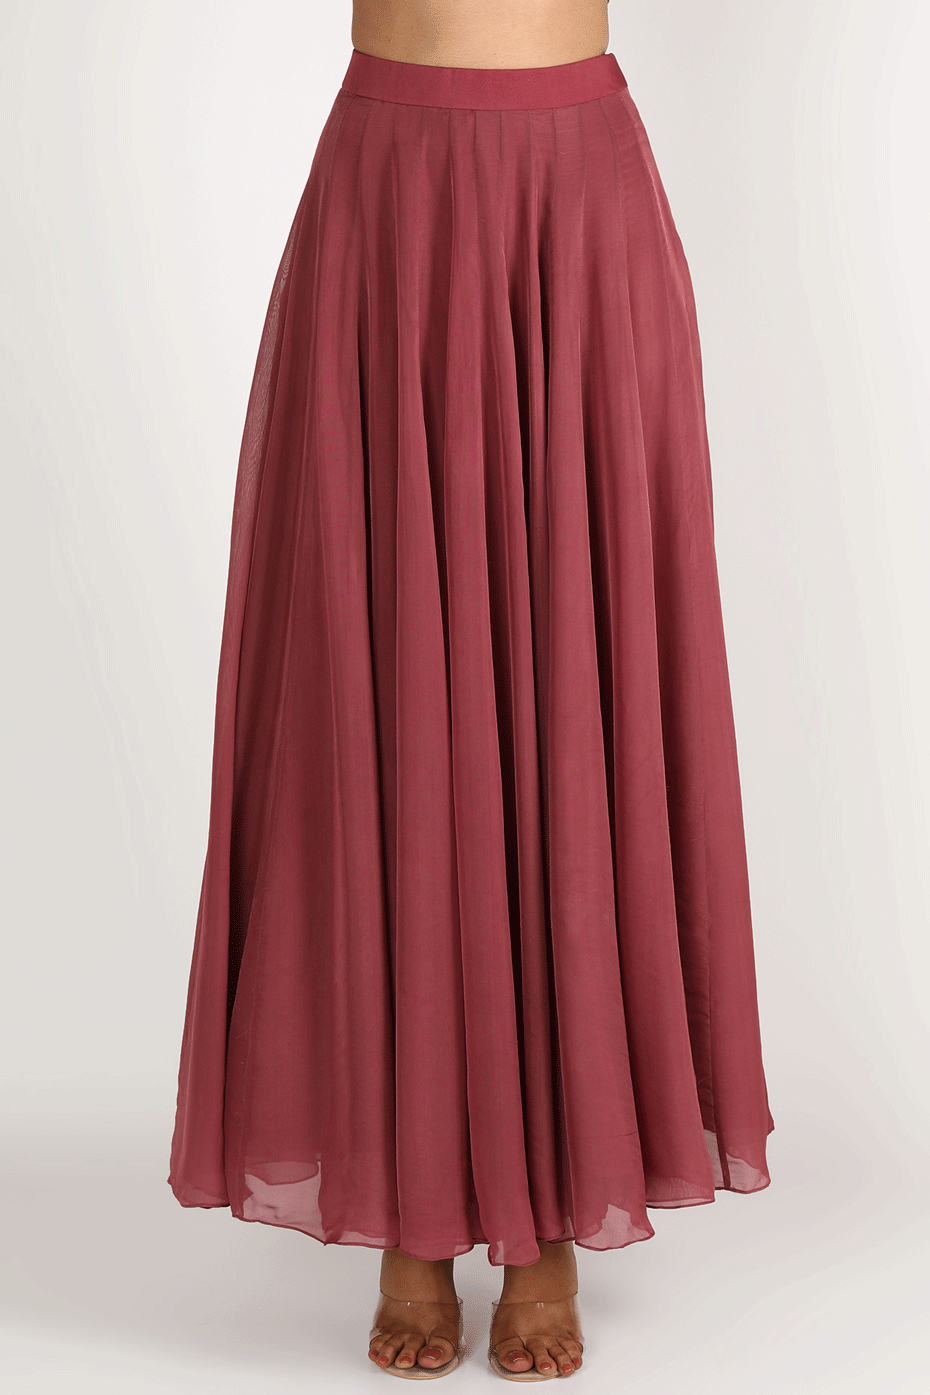 Brown Embroidered Skirt Set